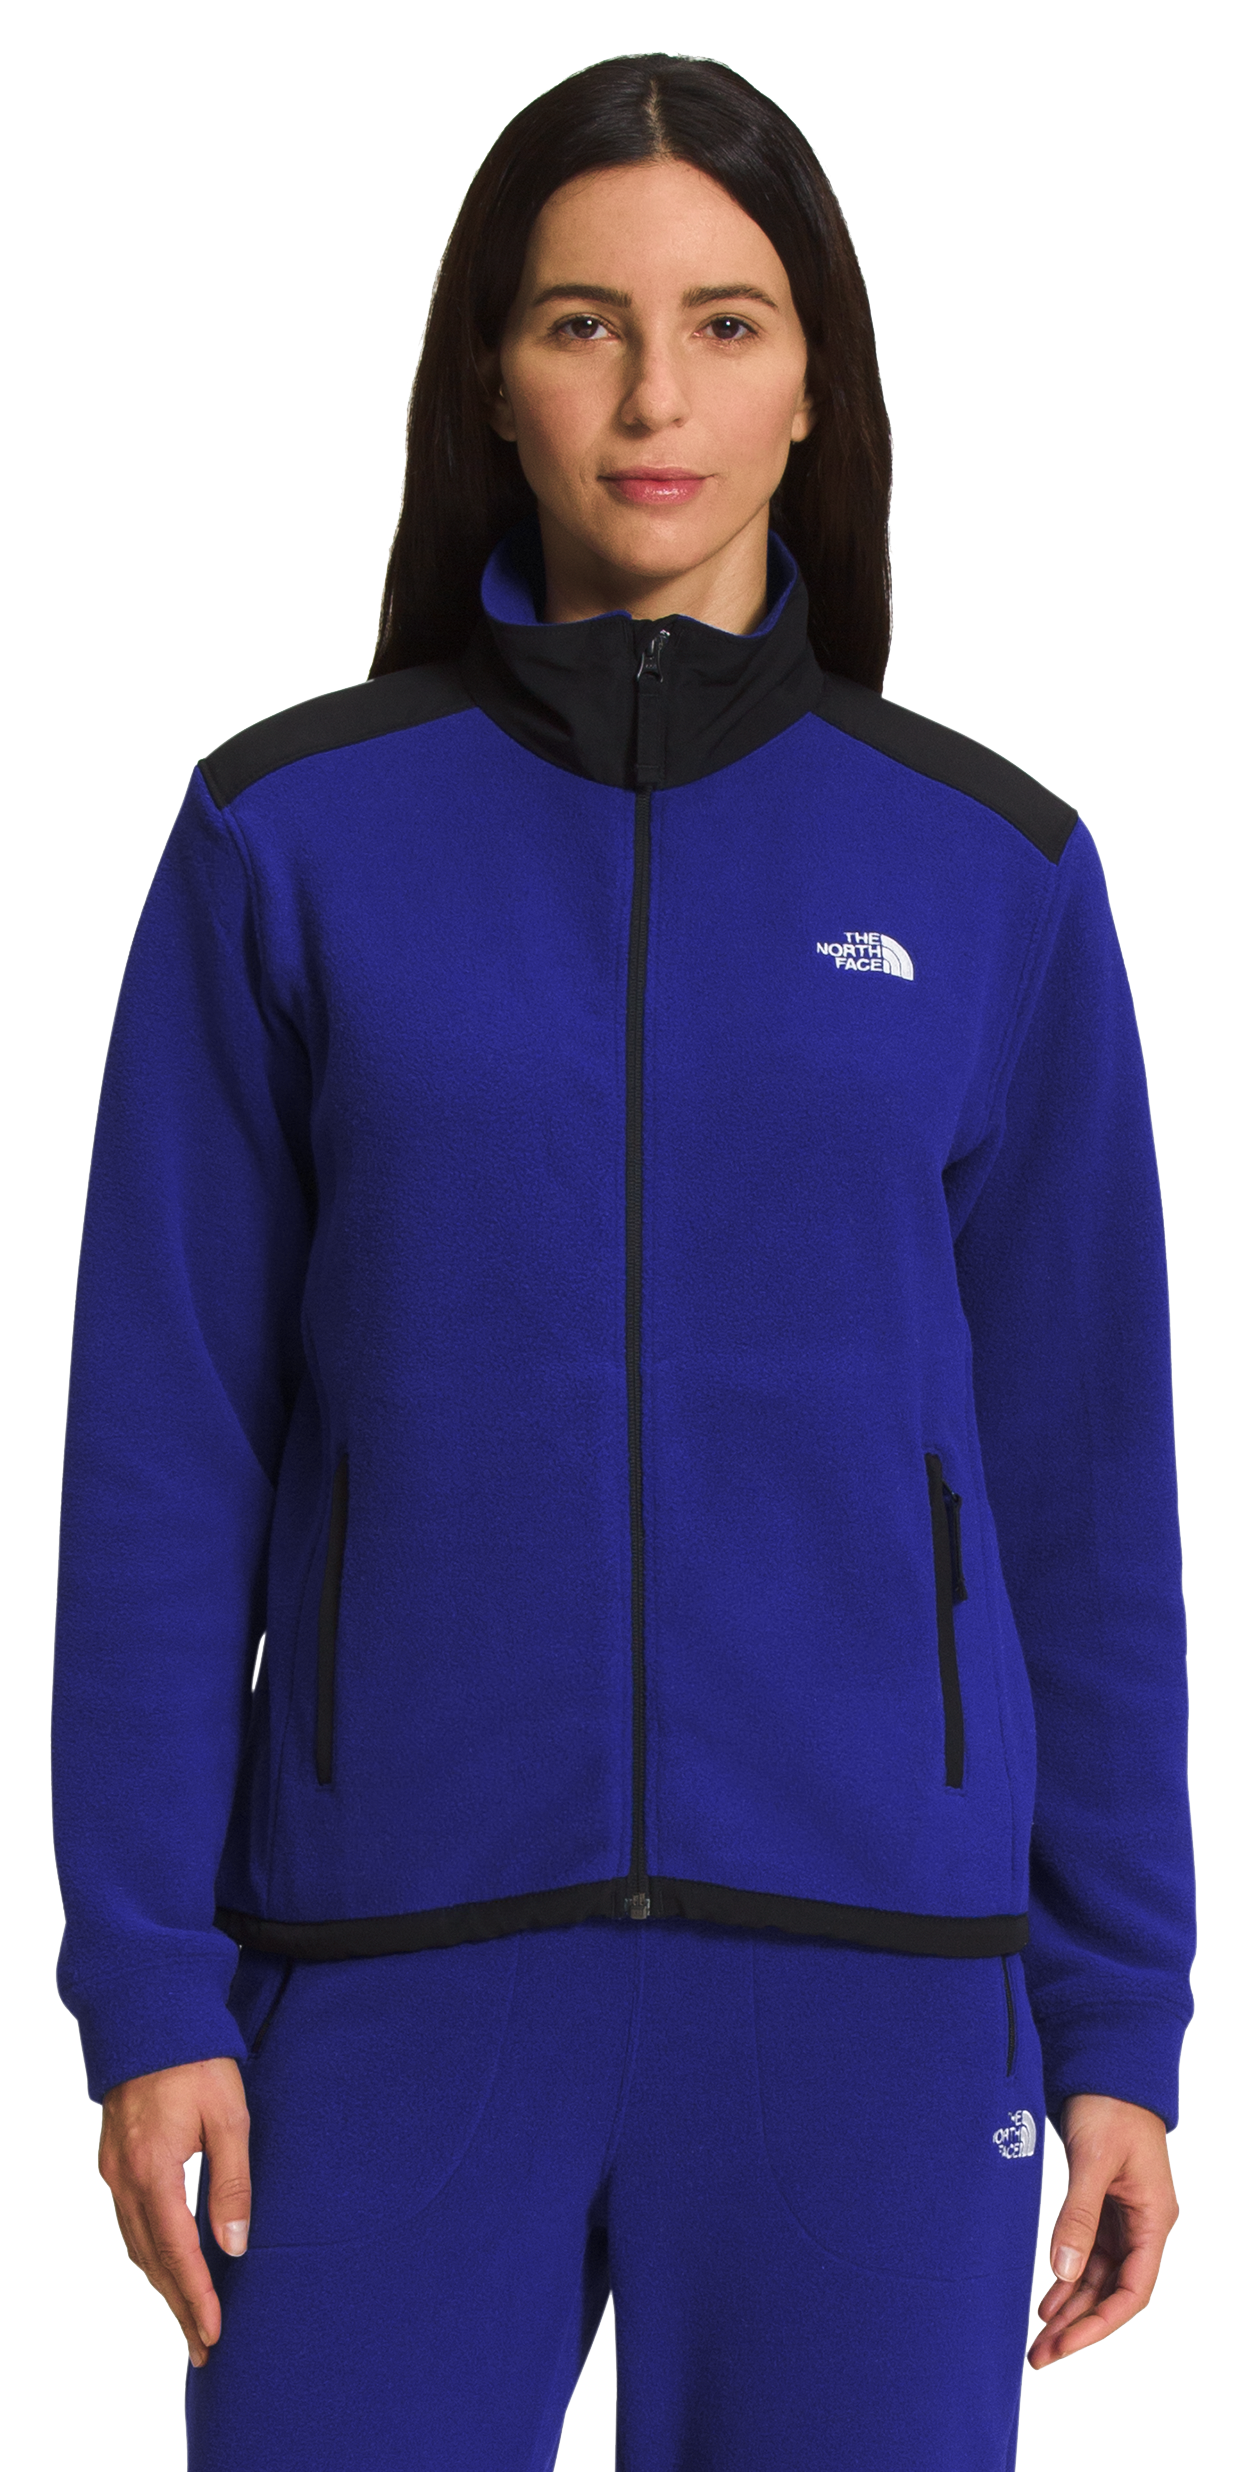 The North Face Alpine Polartec 200 Full-Zip Jacket for Ladies - Lapis Blue/TNF Black - S